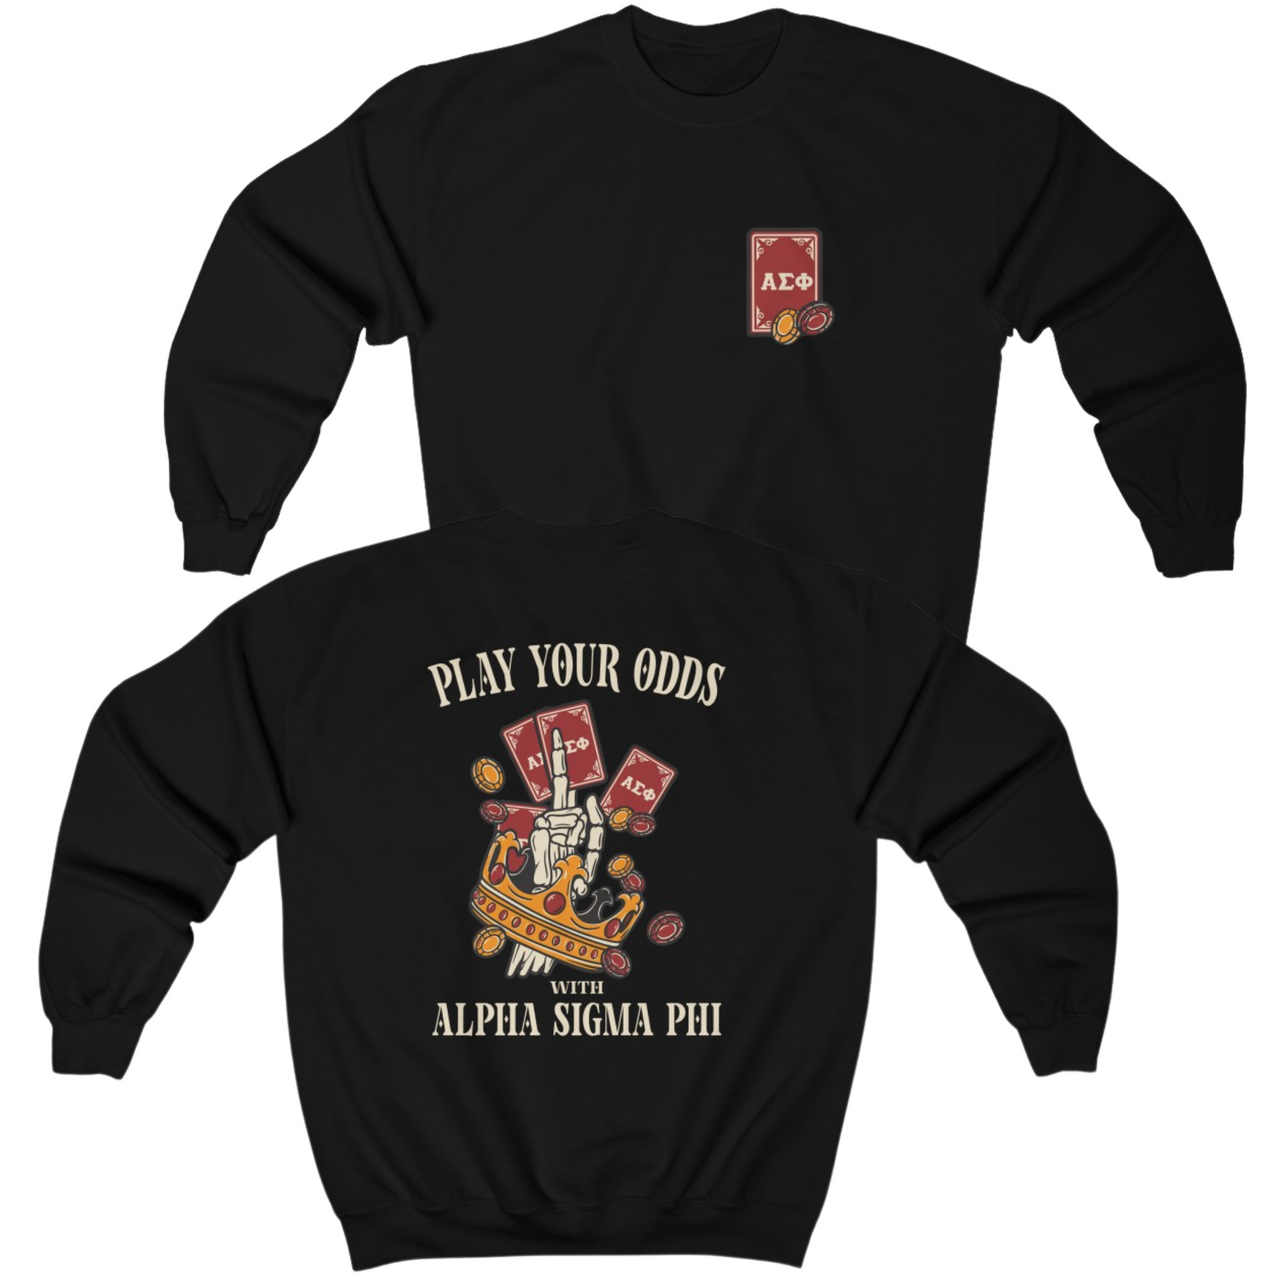 Black Alpha Sigma Phi Graphic Crewneck Sweatshirt | Play Your Odds | Alpha Sigma Phi Fraternity Crewneck Shirt 